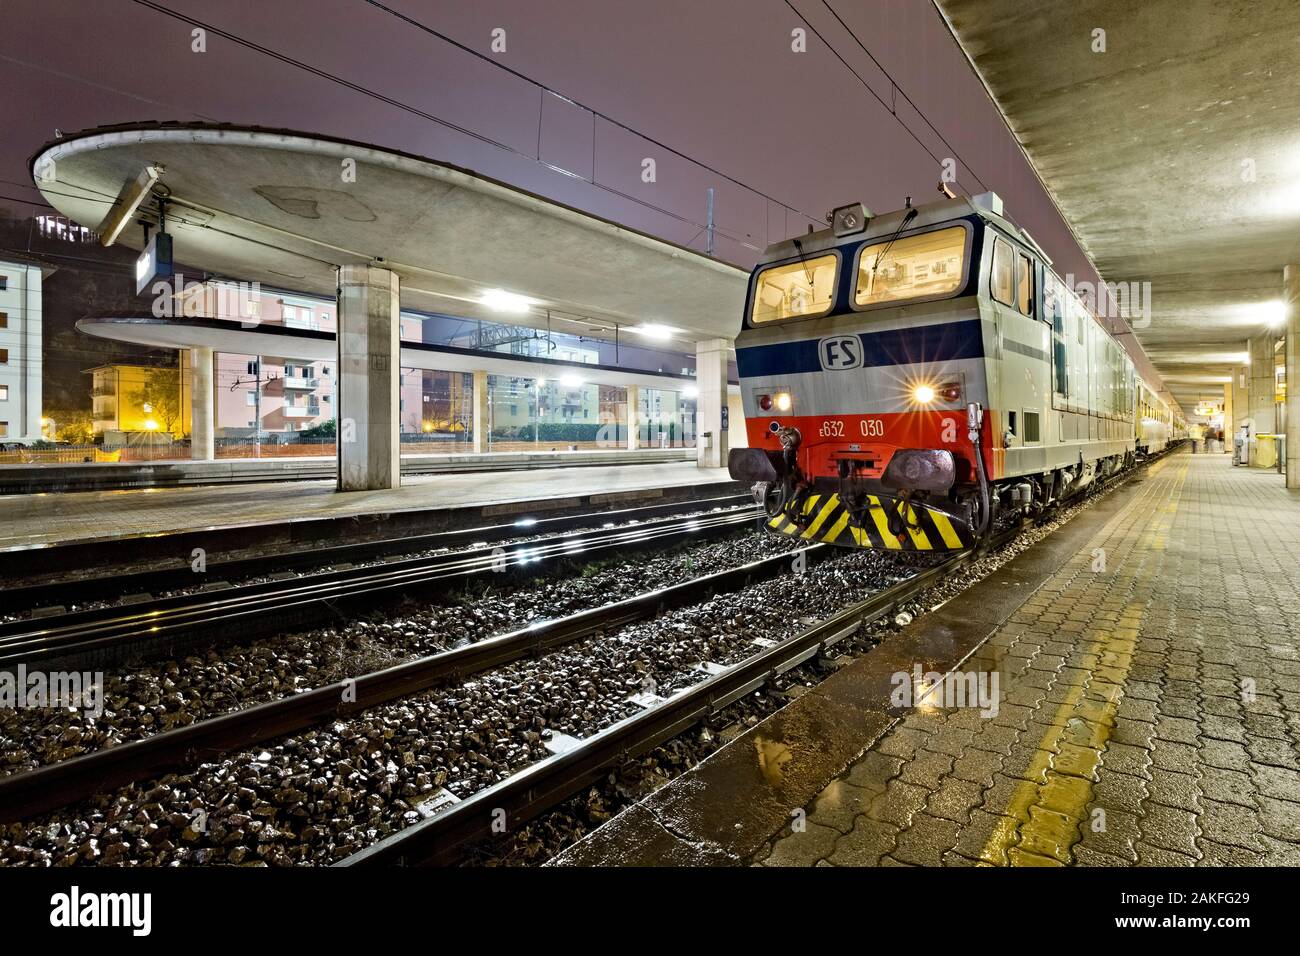 FS E 632 Lokomotive im Bahnhof Trento. Trentino, Italien. Stockfoto